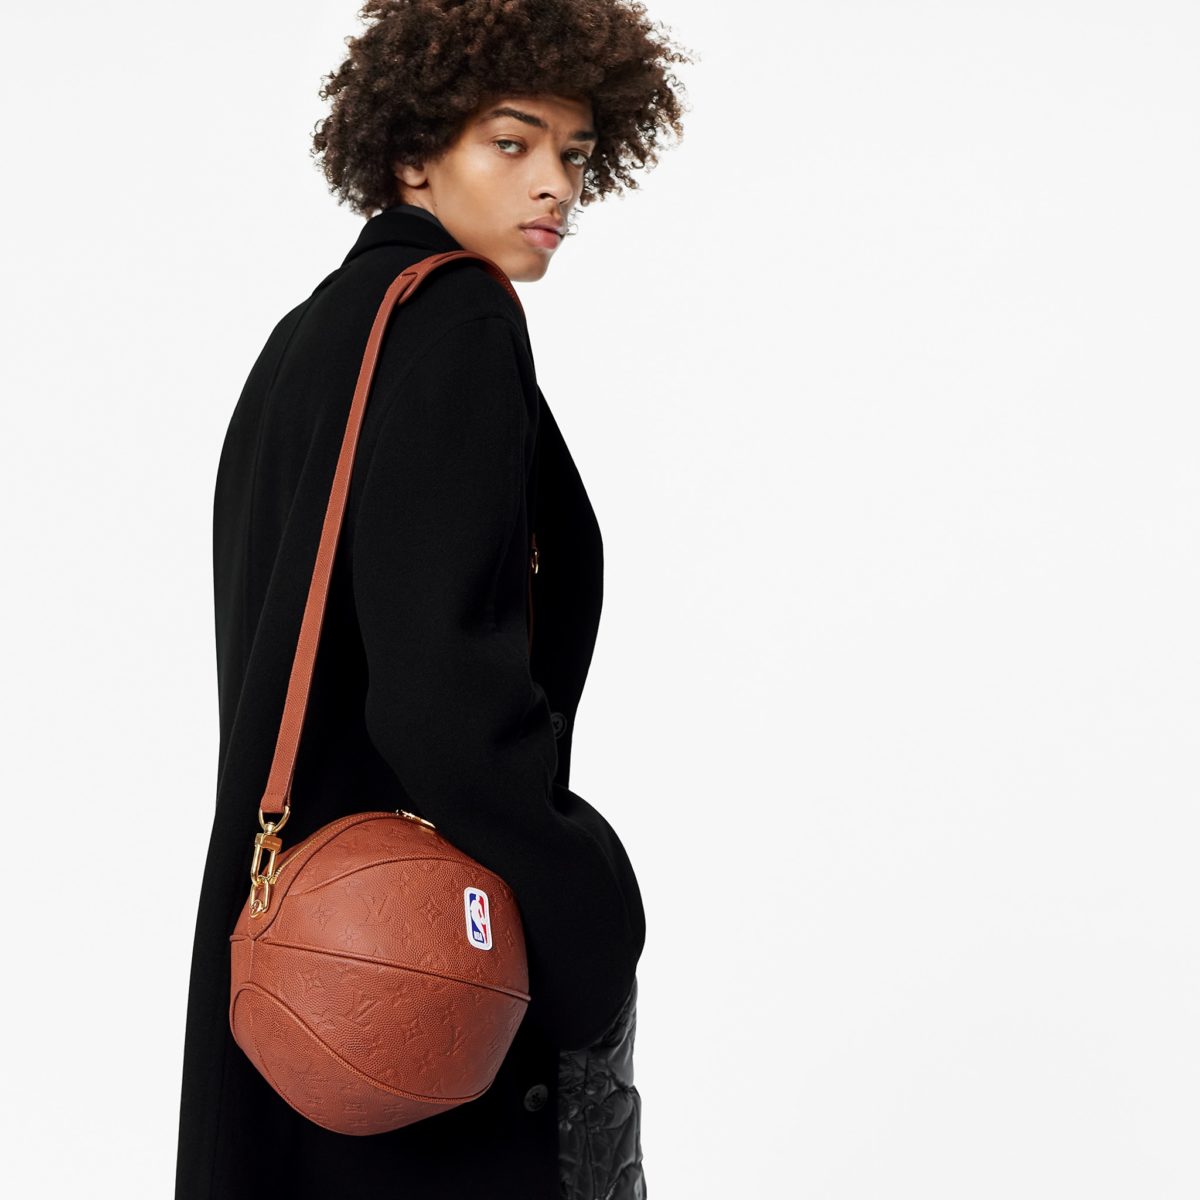 Louis Vuitton x NBA's $5,650 Ball In Basket Bag Is A Versatile Flex